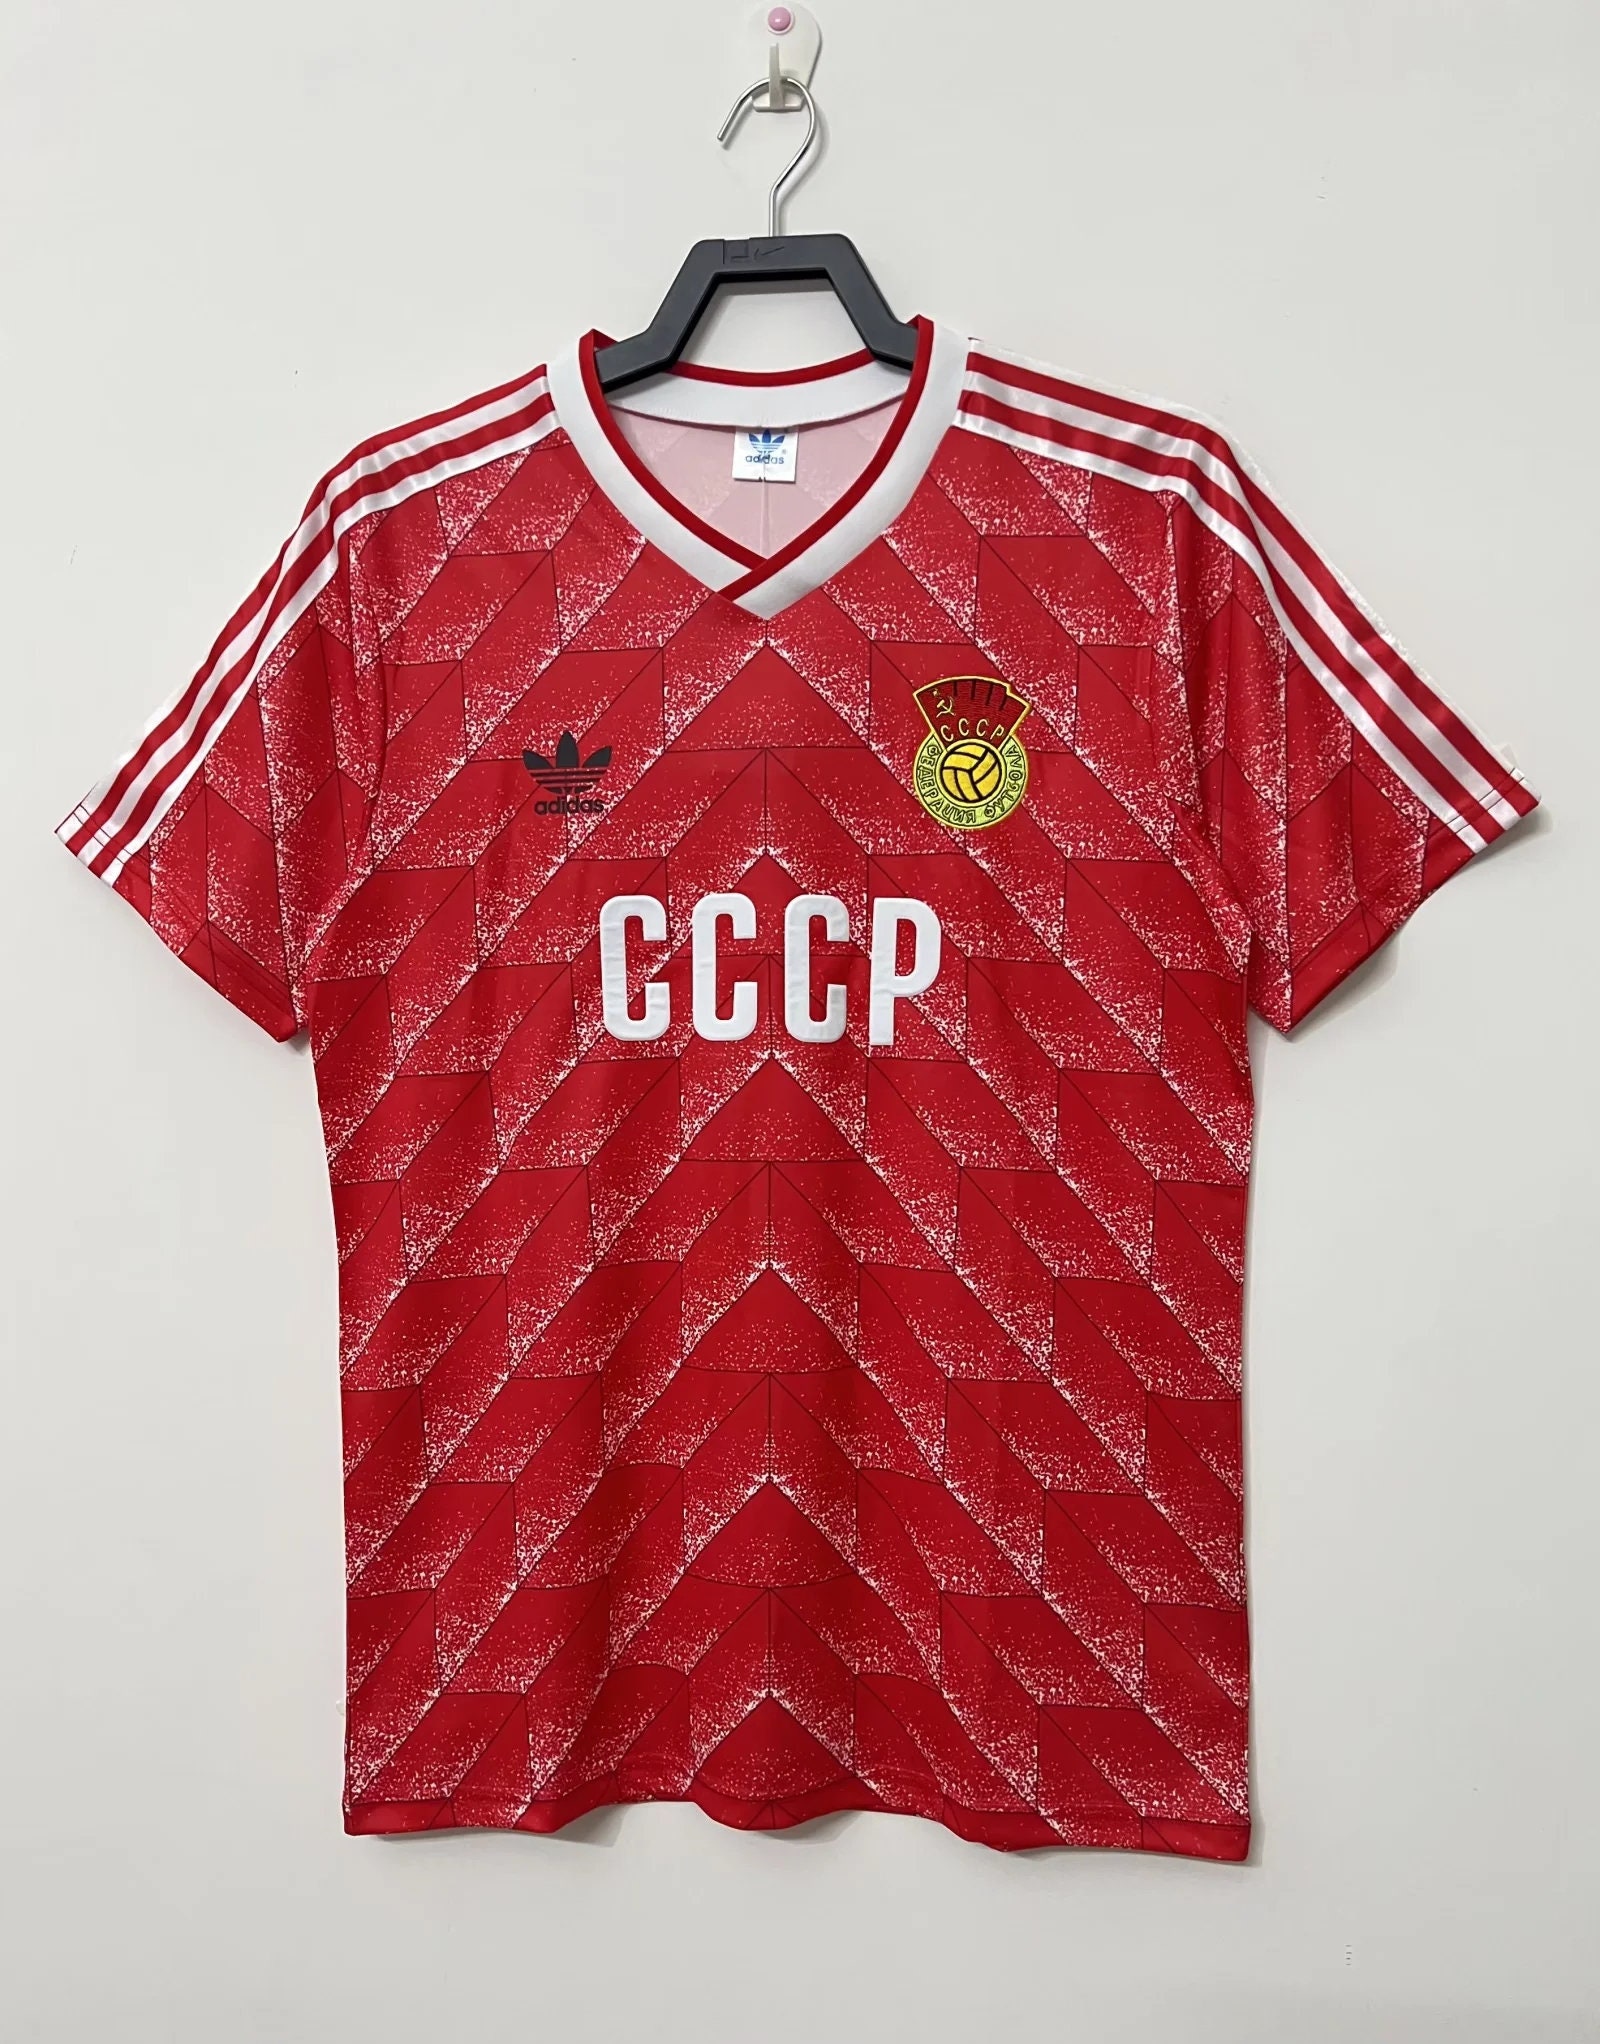 Cccp Football Shirt -